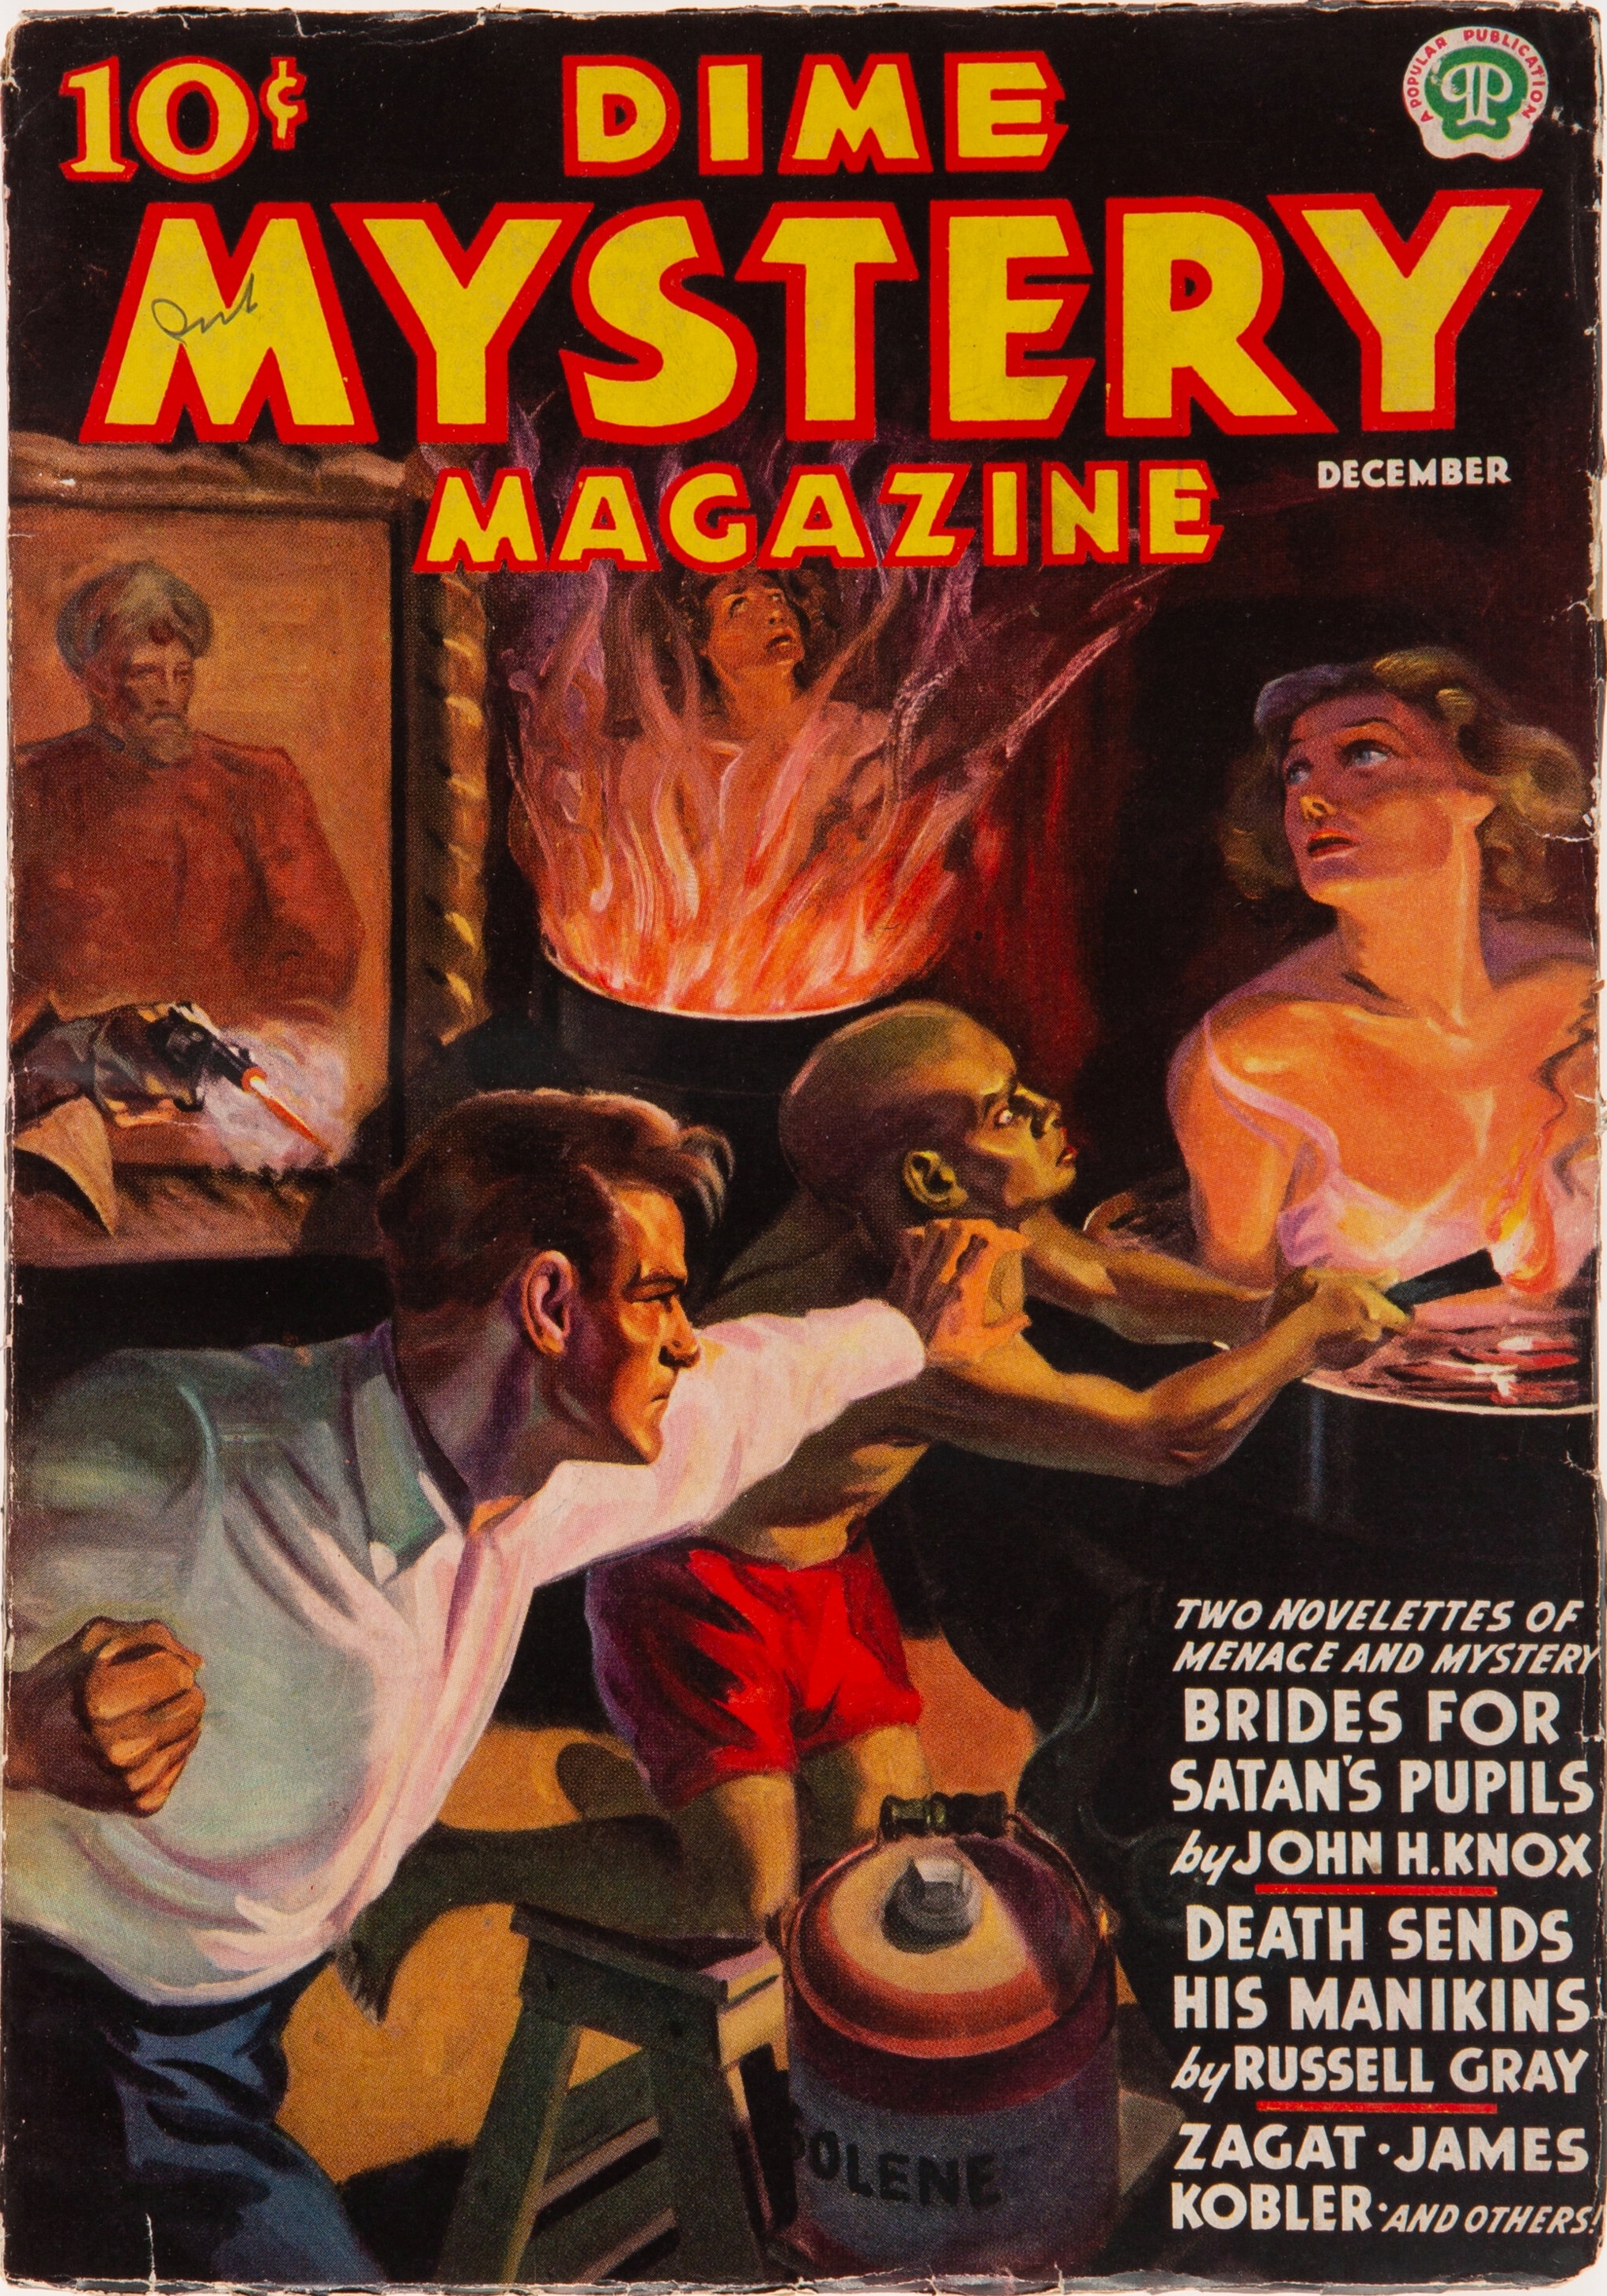 Dime Mystery Magazine - December 1937